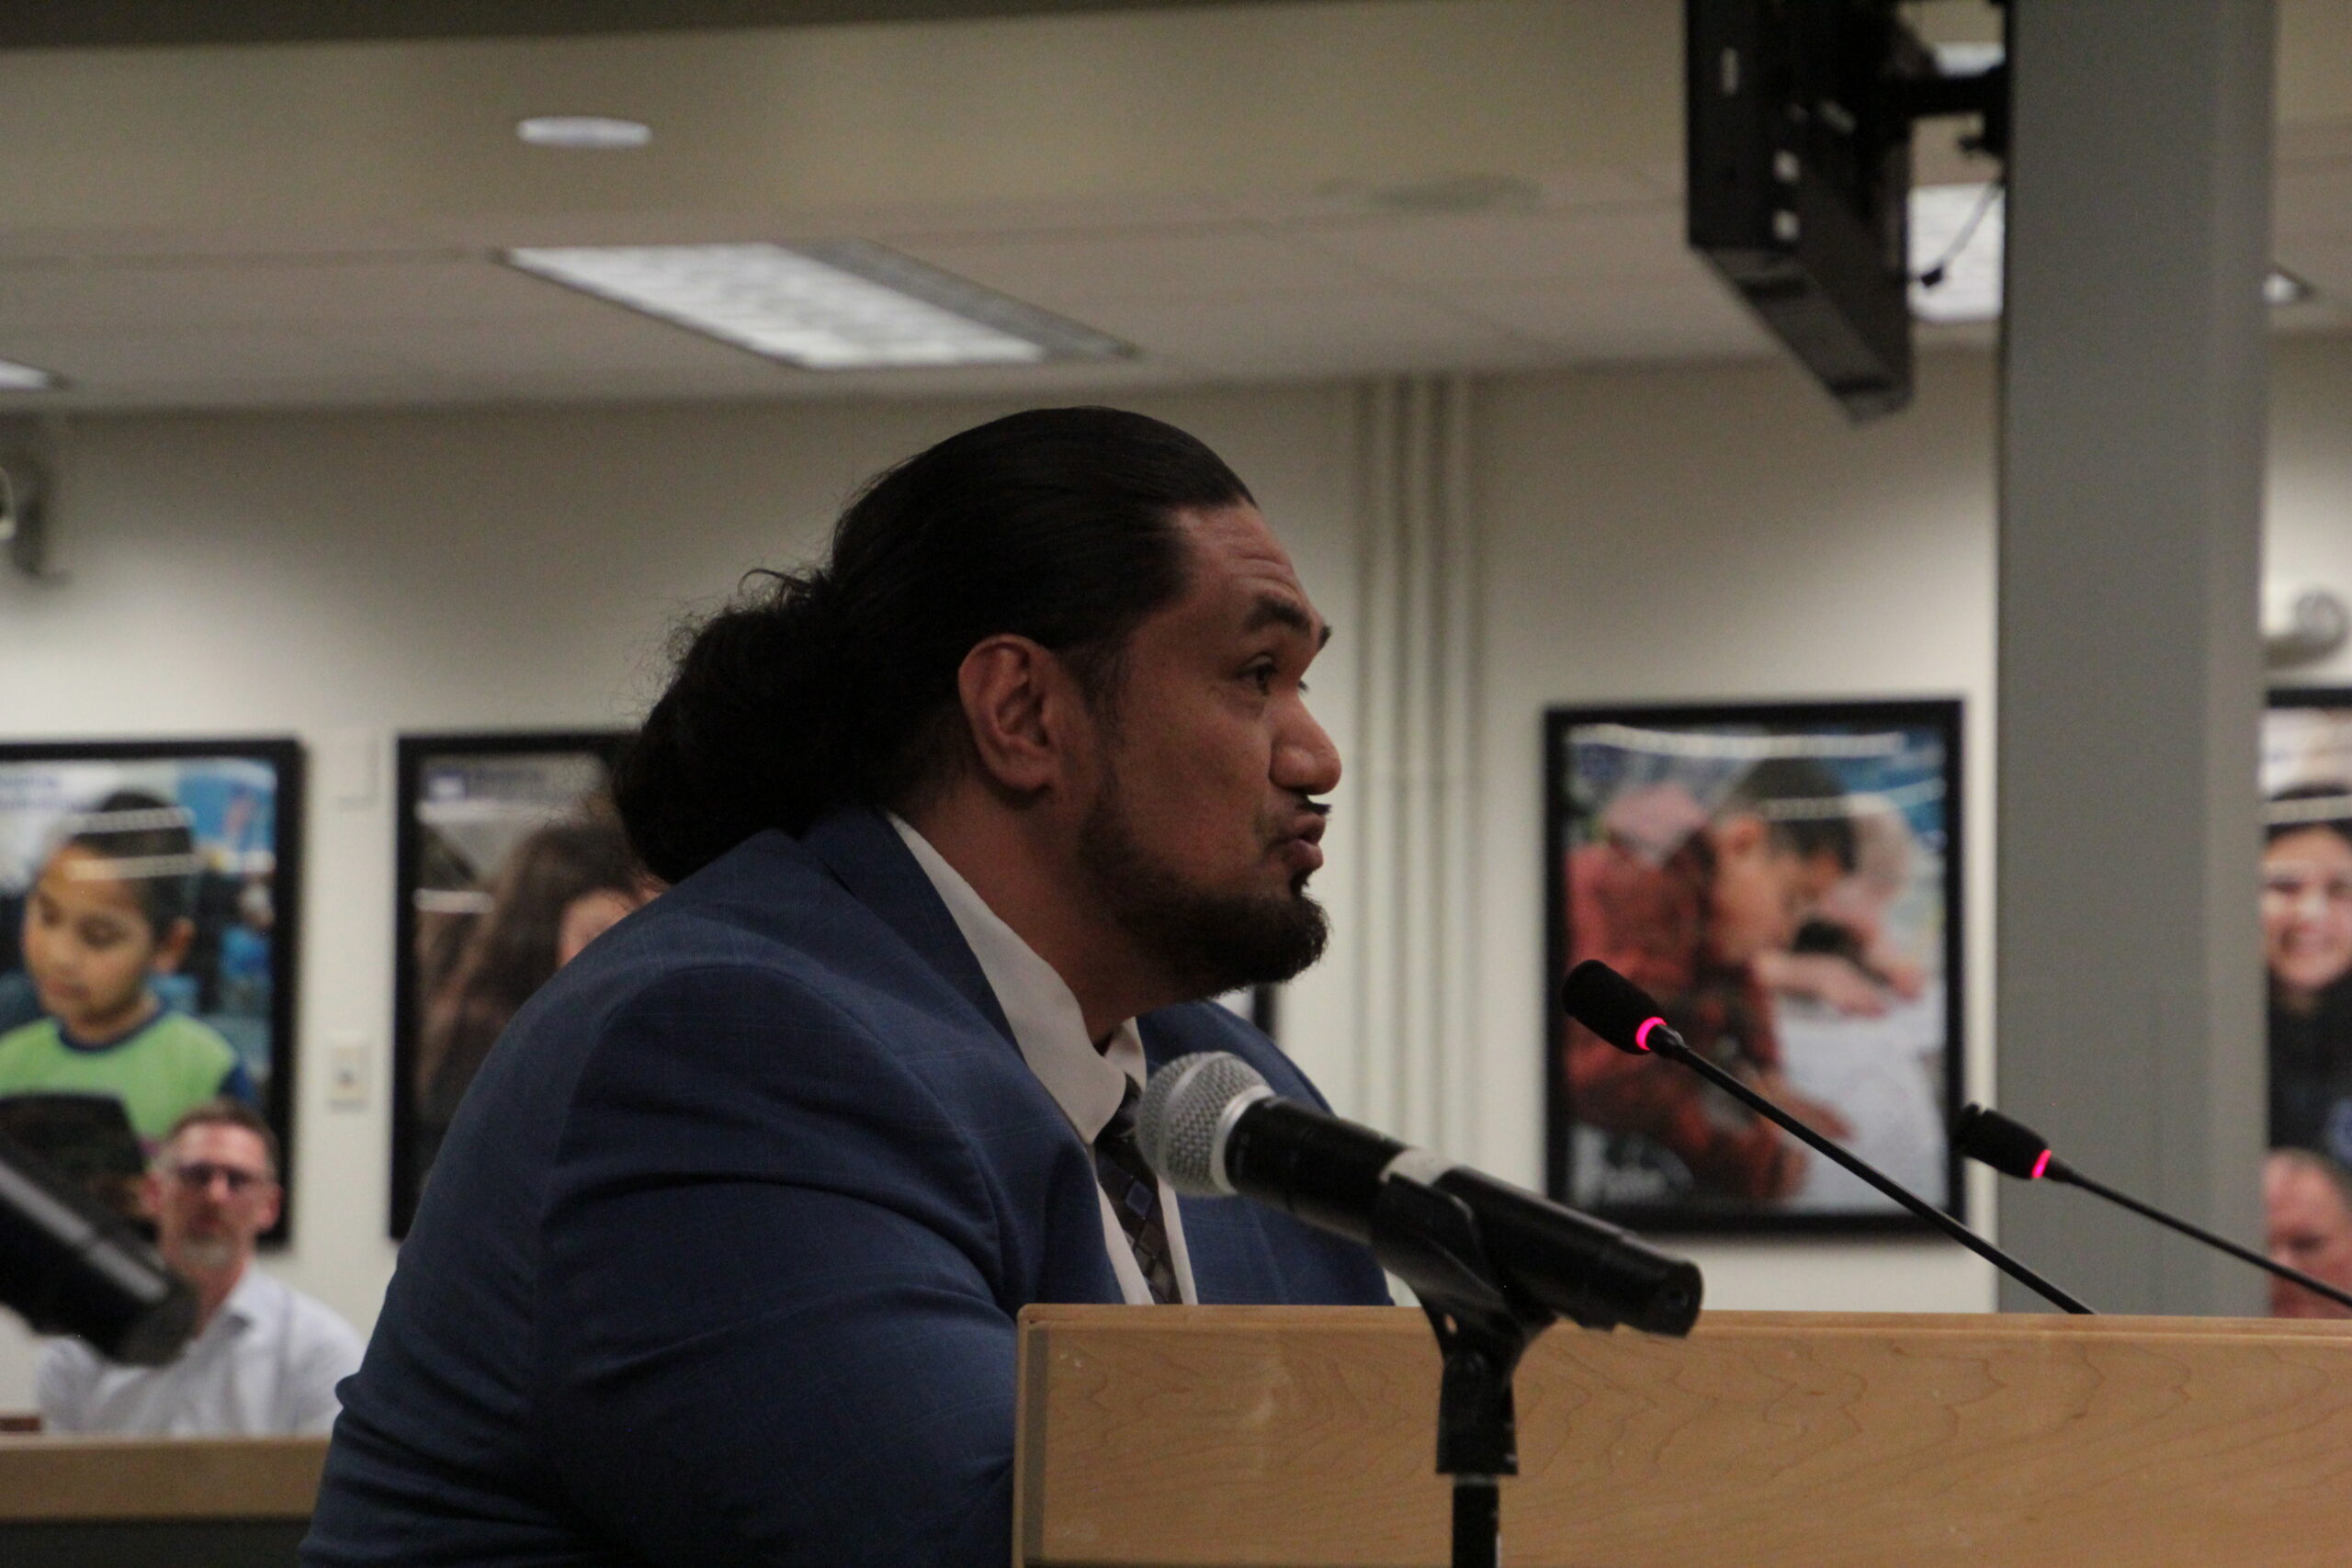 A man in a blue suit jacket speaks at a school board meeting